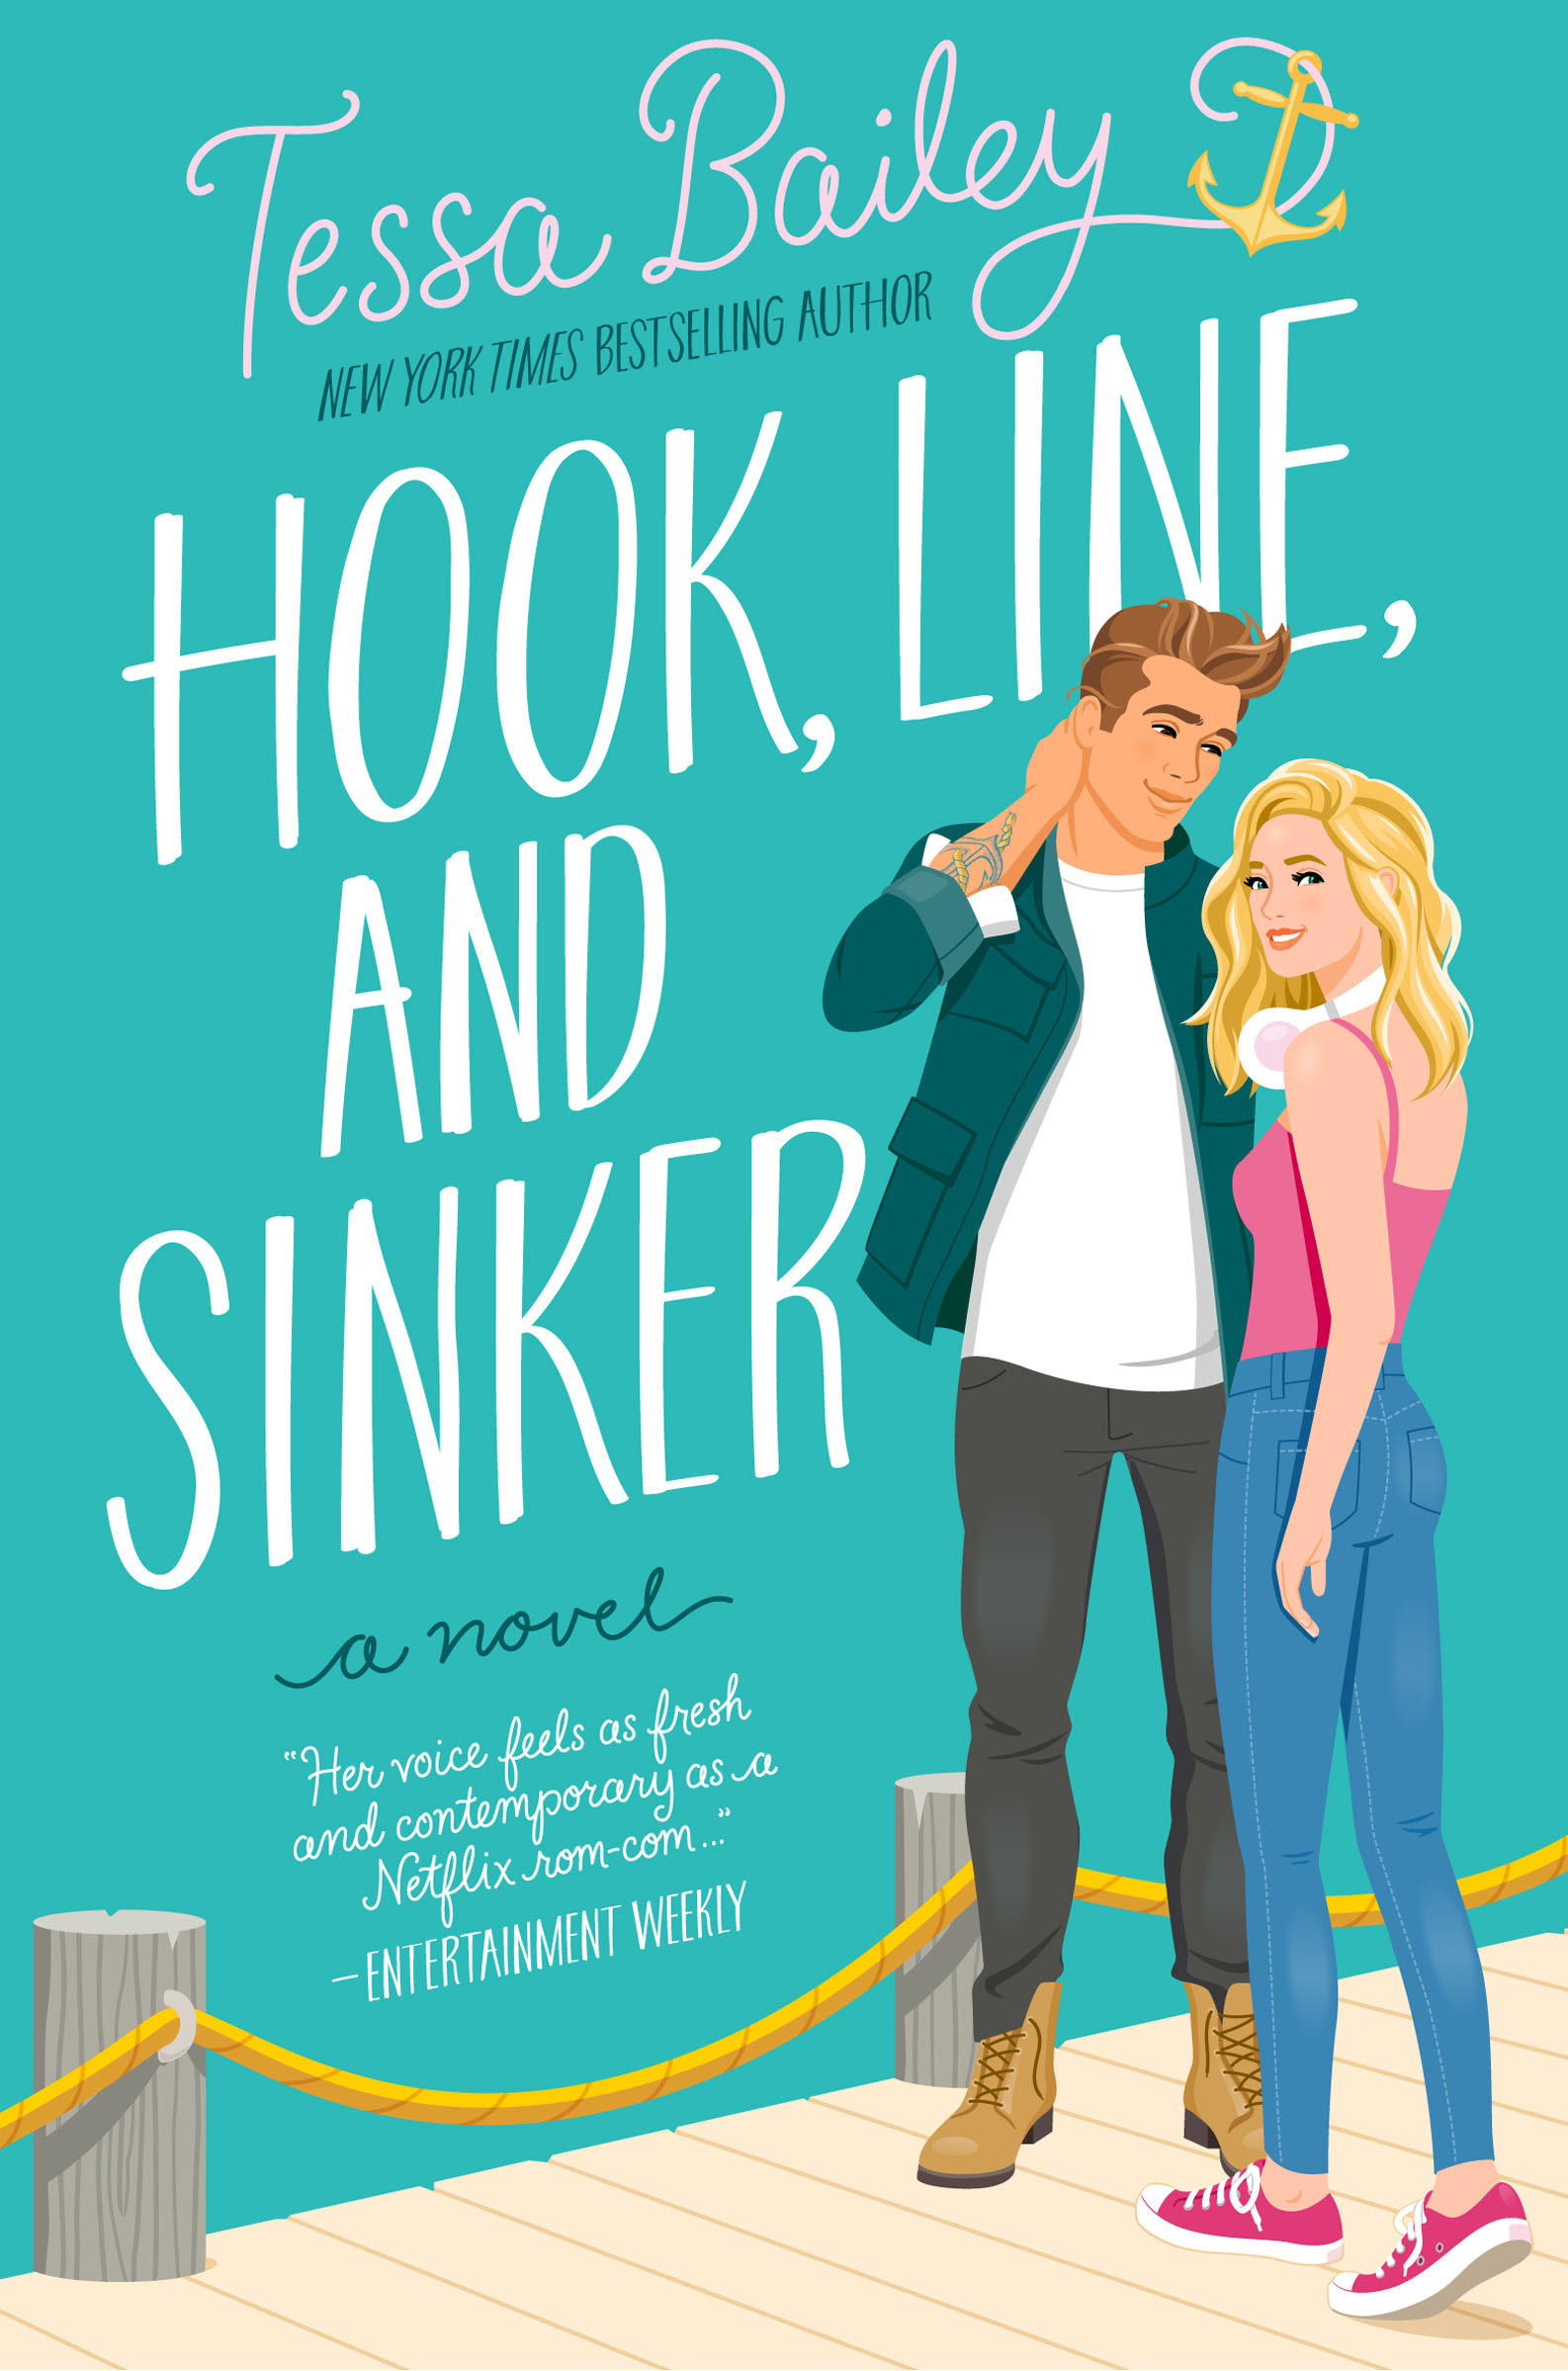 Hook, line, and sinker